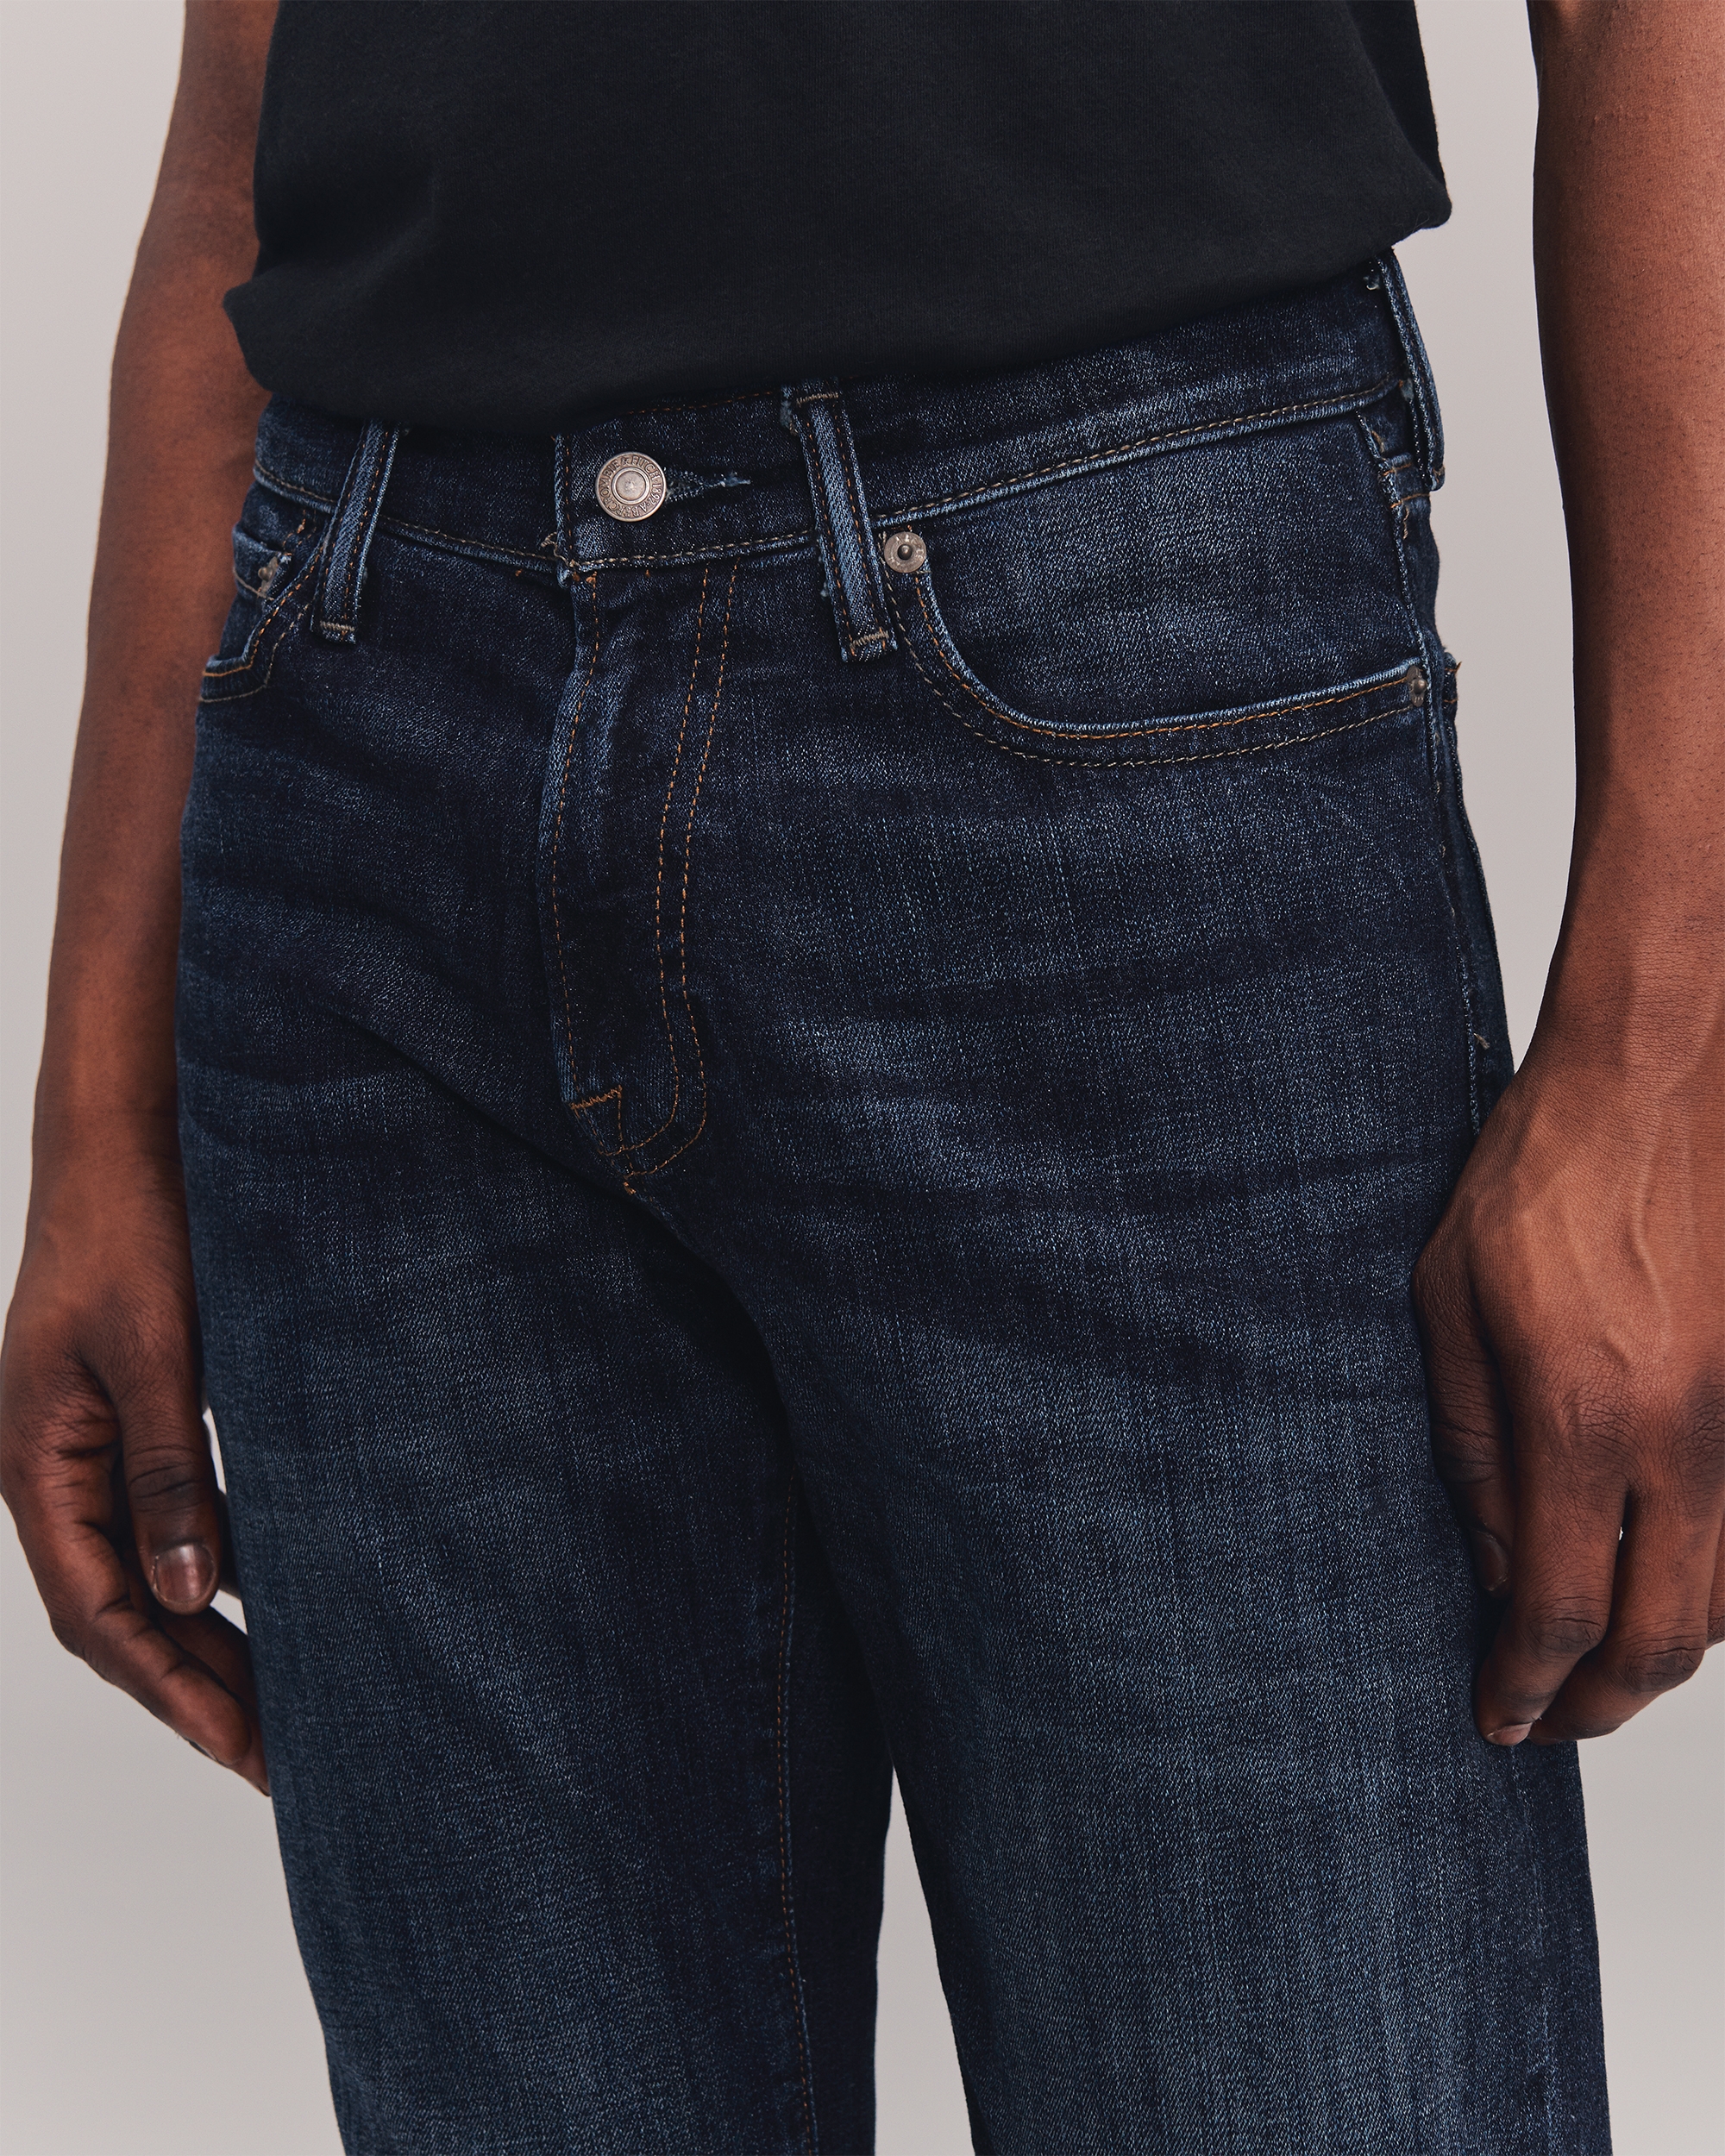 Men's Athletic Skinny Jean | Men's Bottoms | Abercrombie.com